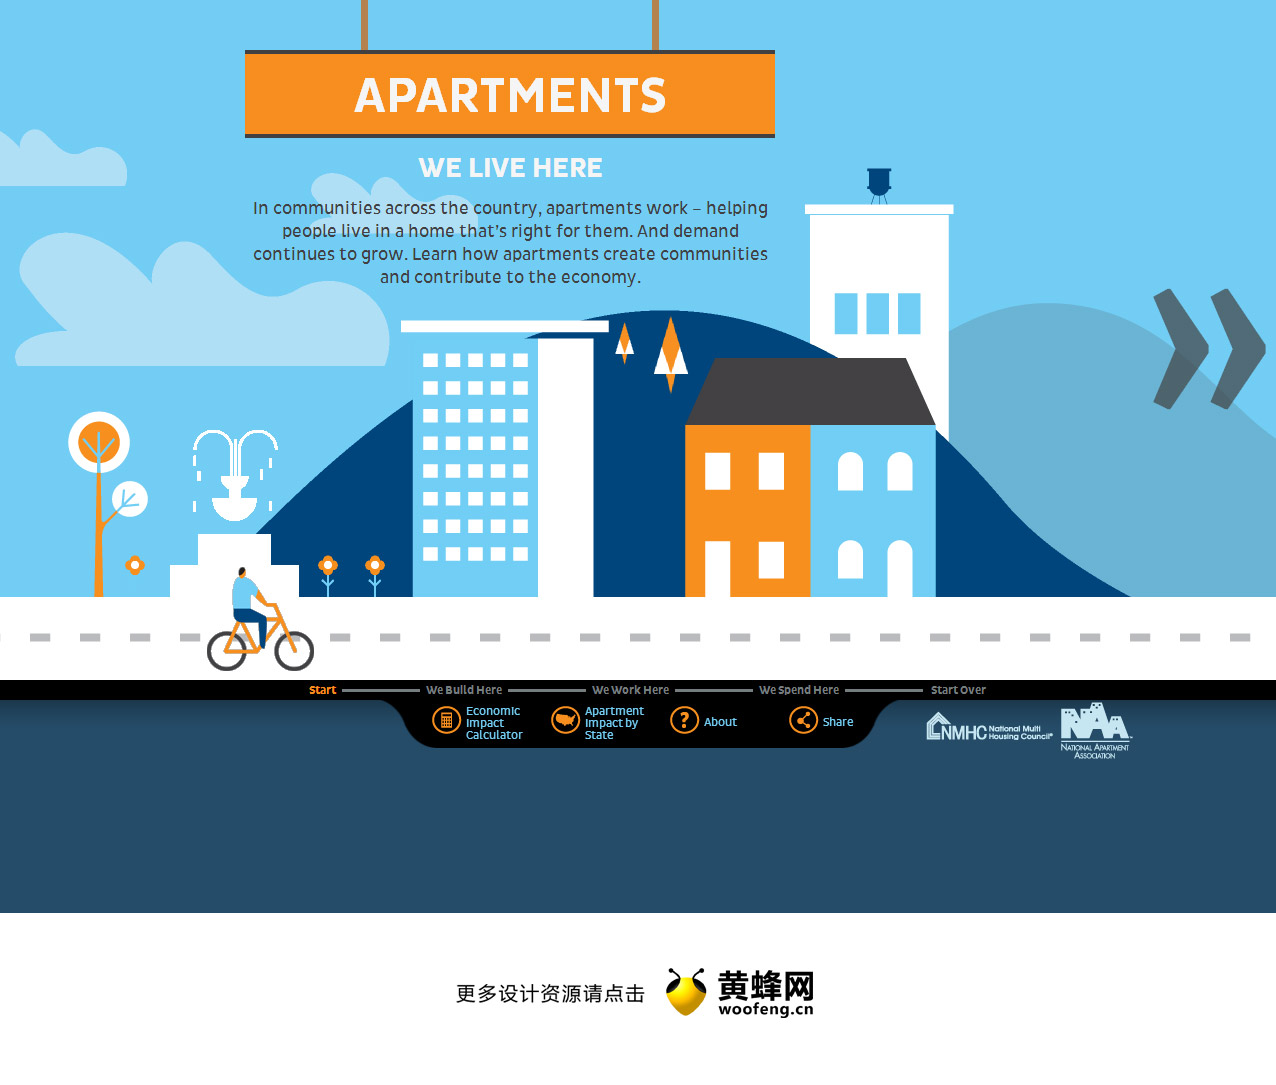 Apartments我们住在这里，来源自黄蜂网https://woofeng.cn/